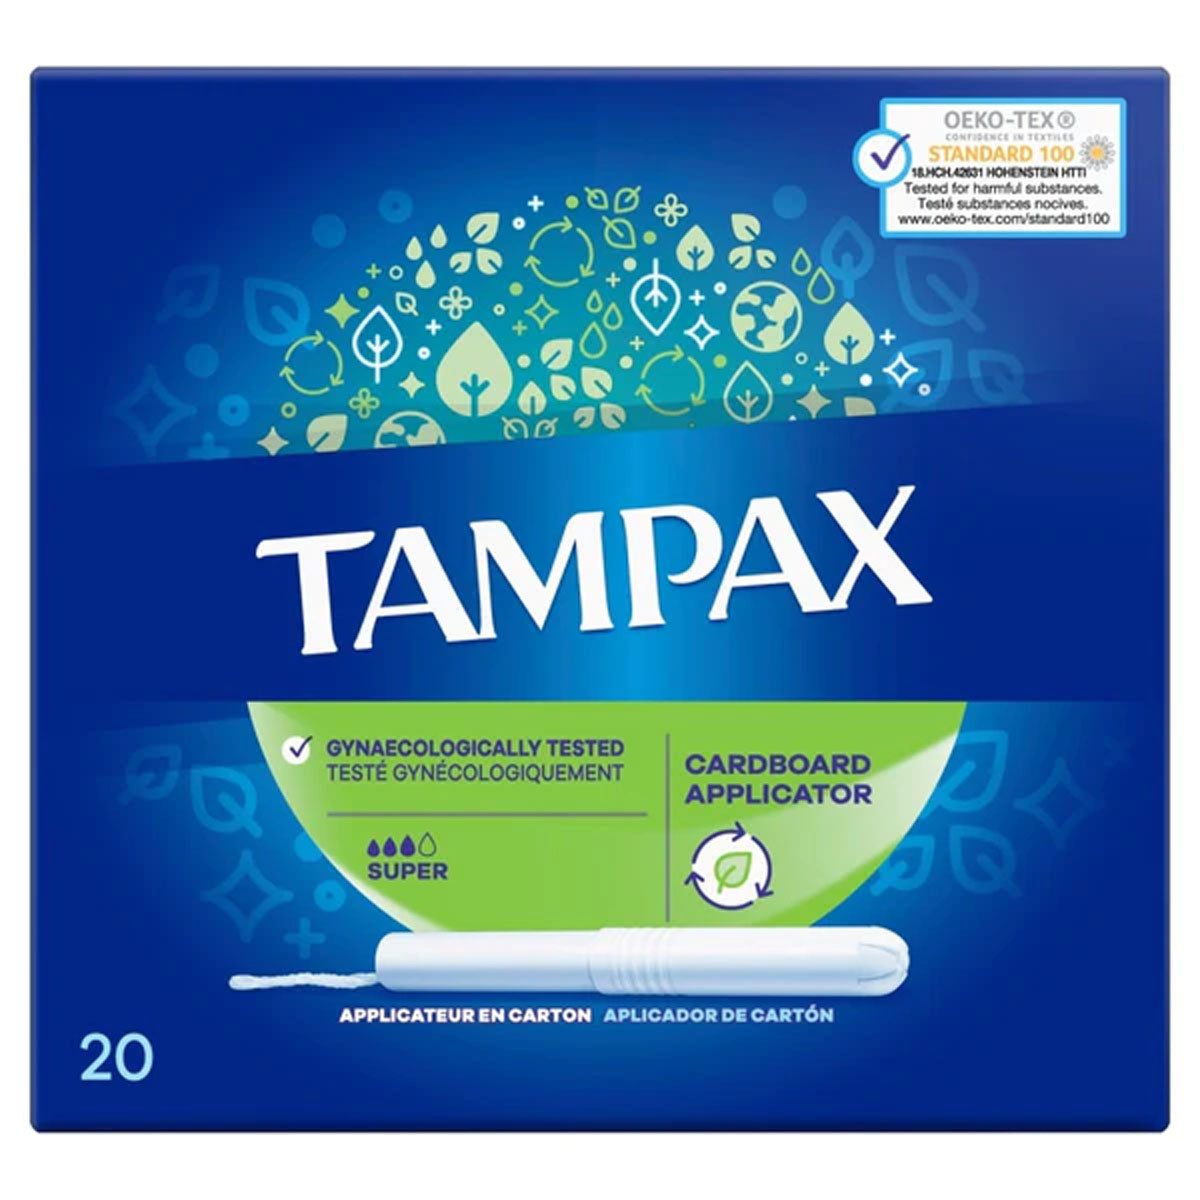 Tampax - Blue Super - 20pcs tampons tampons tampons tampons tampons.